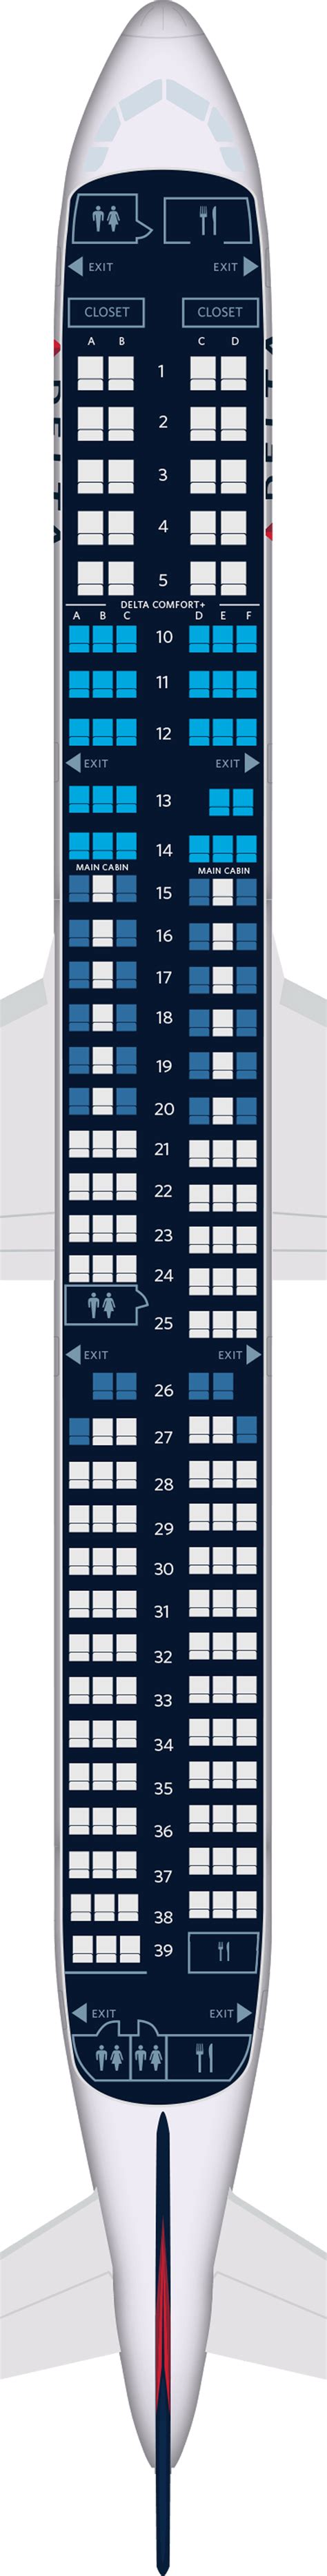 Aa A321 Seat Map Seatguru Seat Map Avianca Airbus A321 321 Kiera